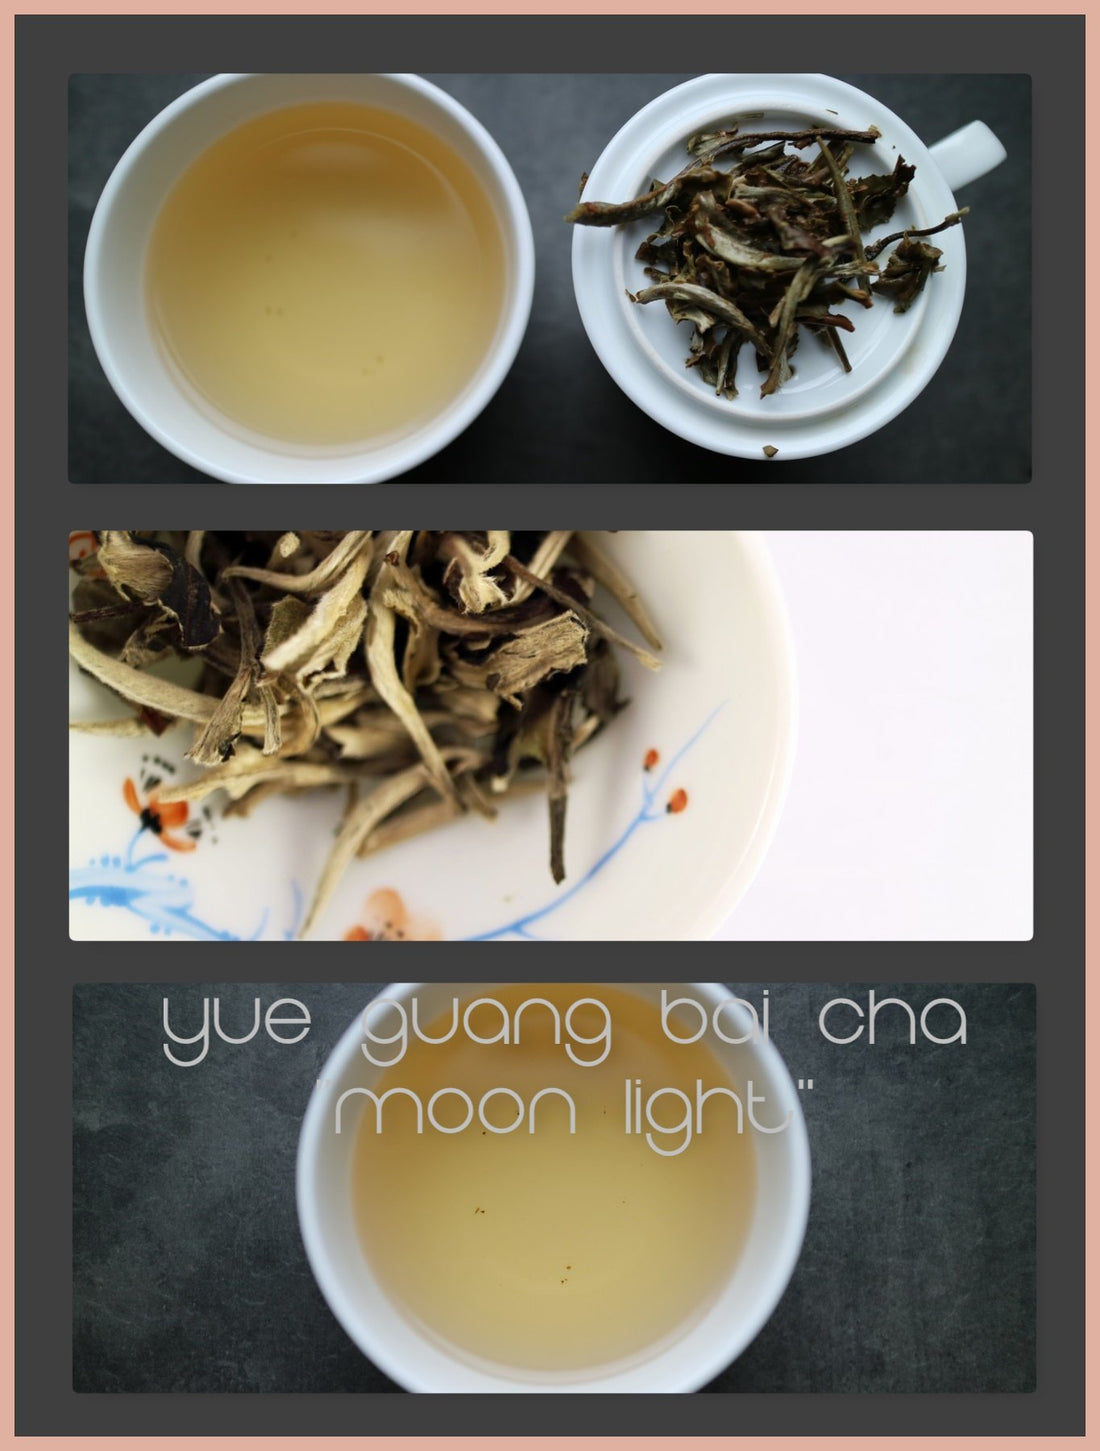 Tasting notes - Yue Guang Bai Cha "Moon Light" - She Fang Boutique Tea